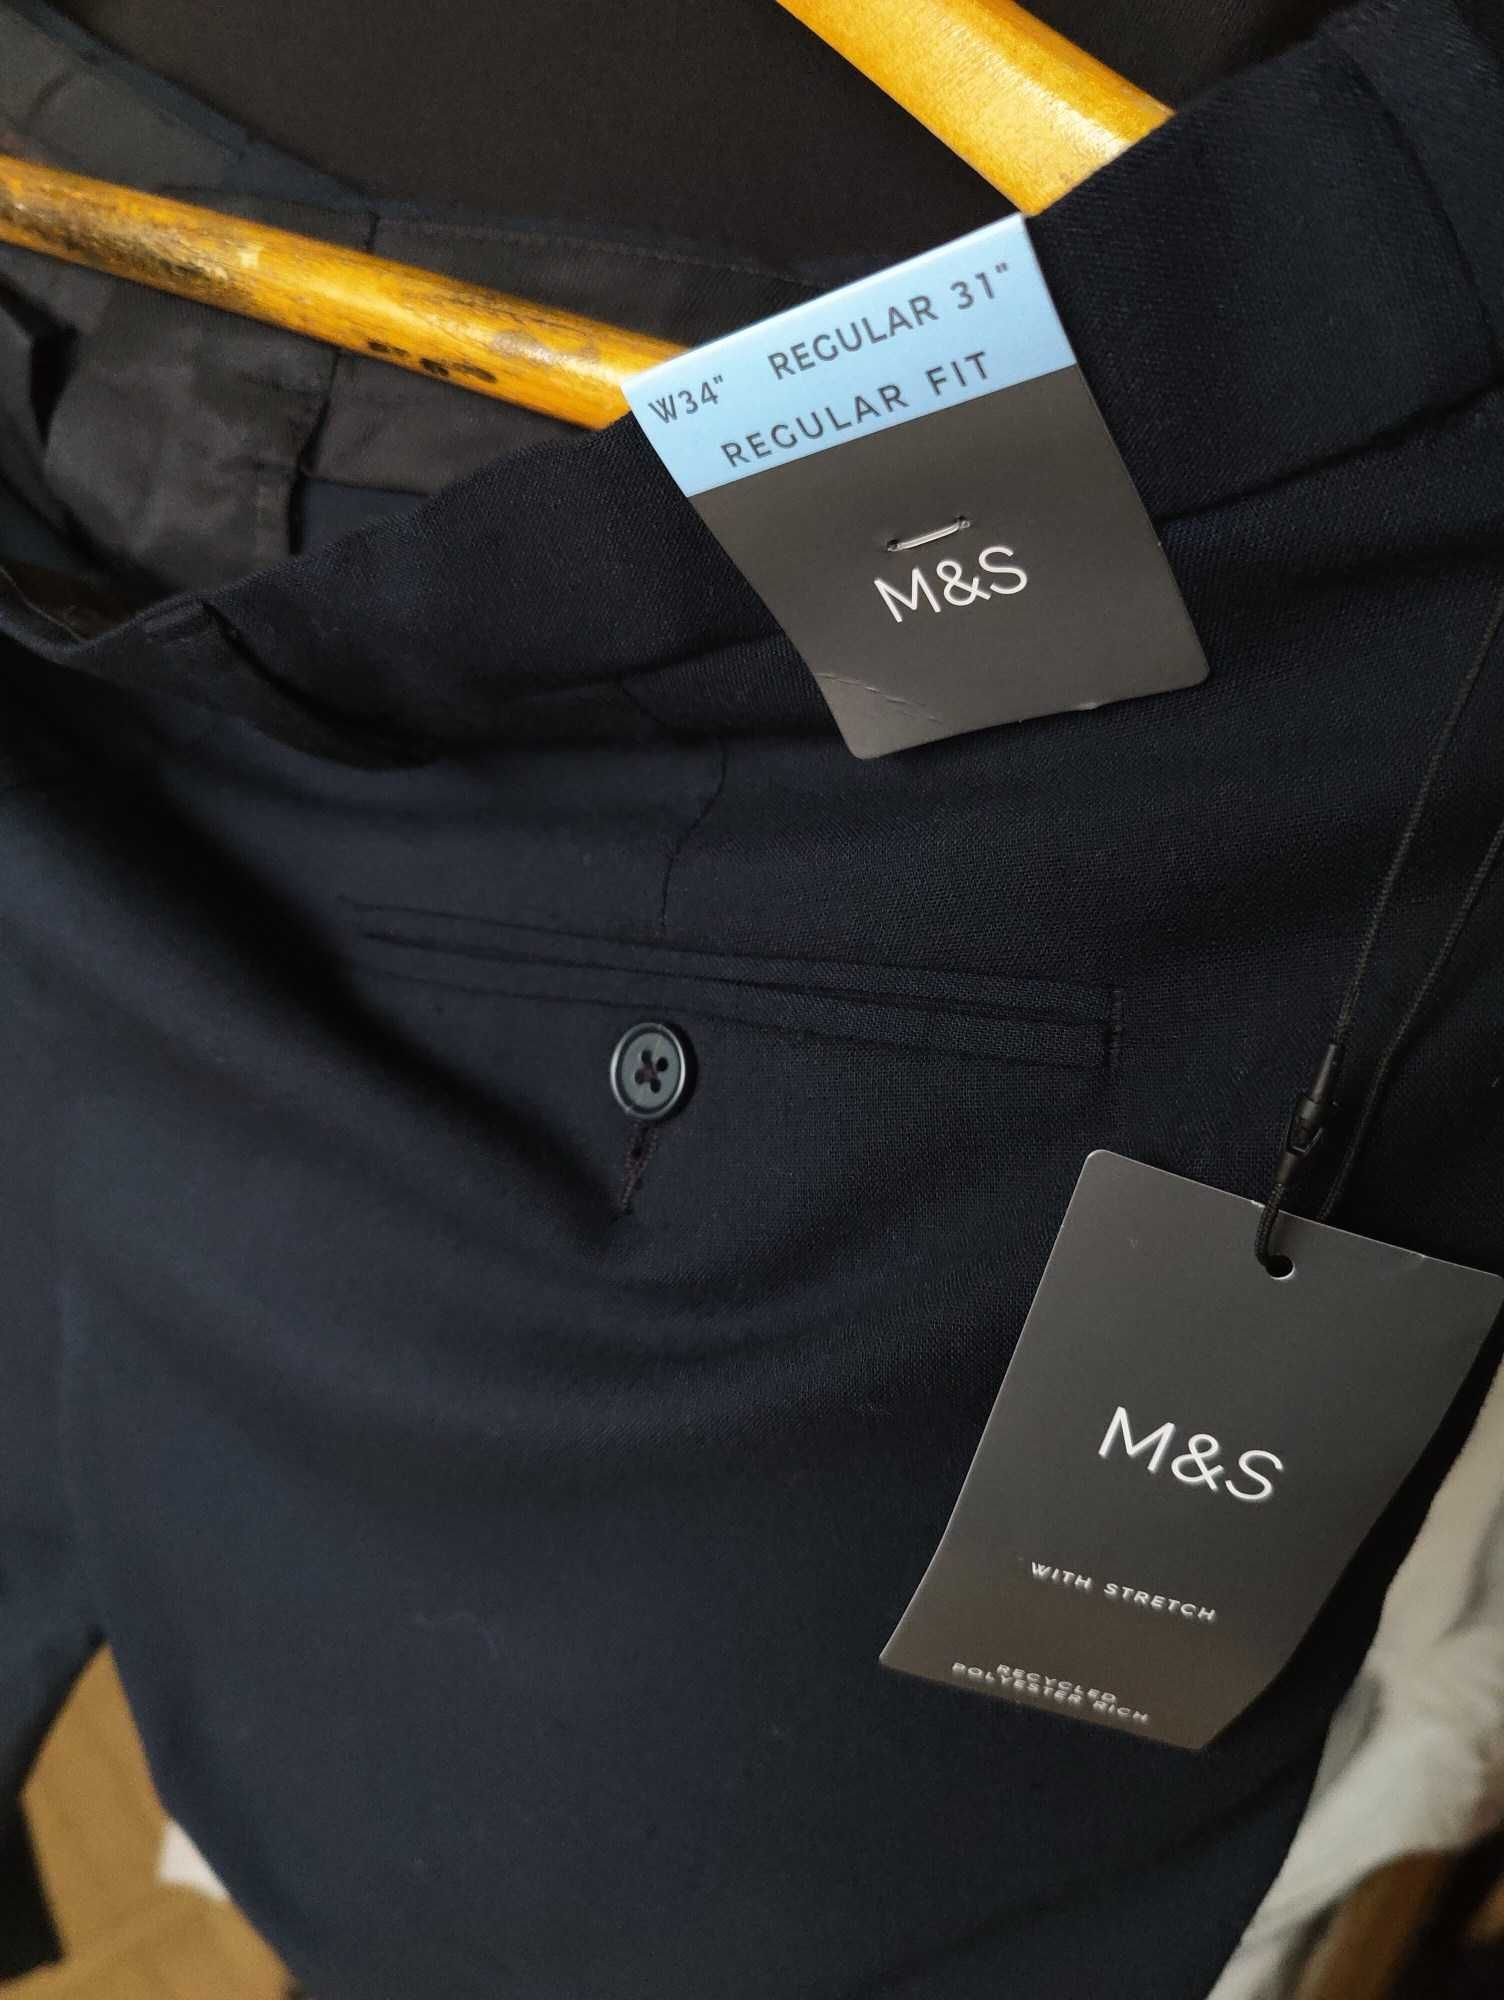 Джинсы брюки Marks&Spencer trousers United Kingdom w34 stretch navy.